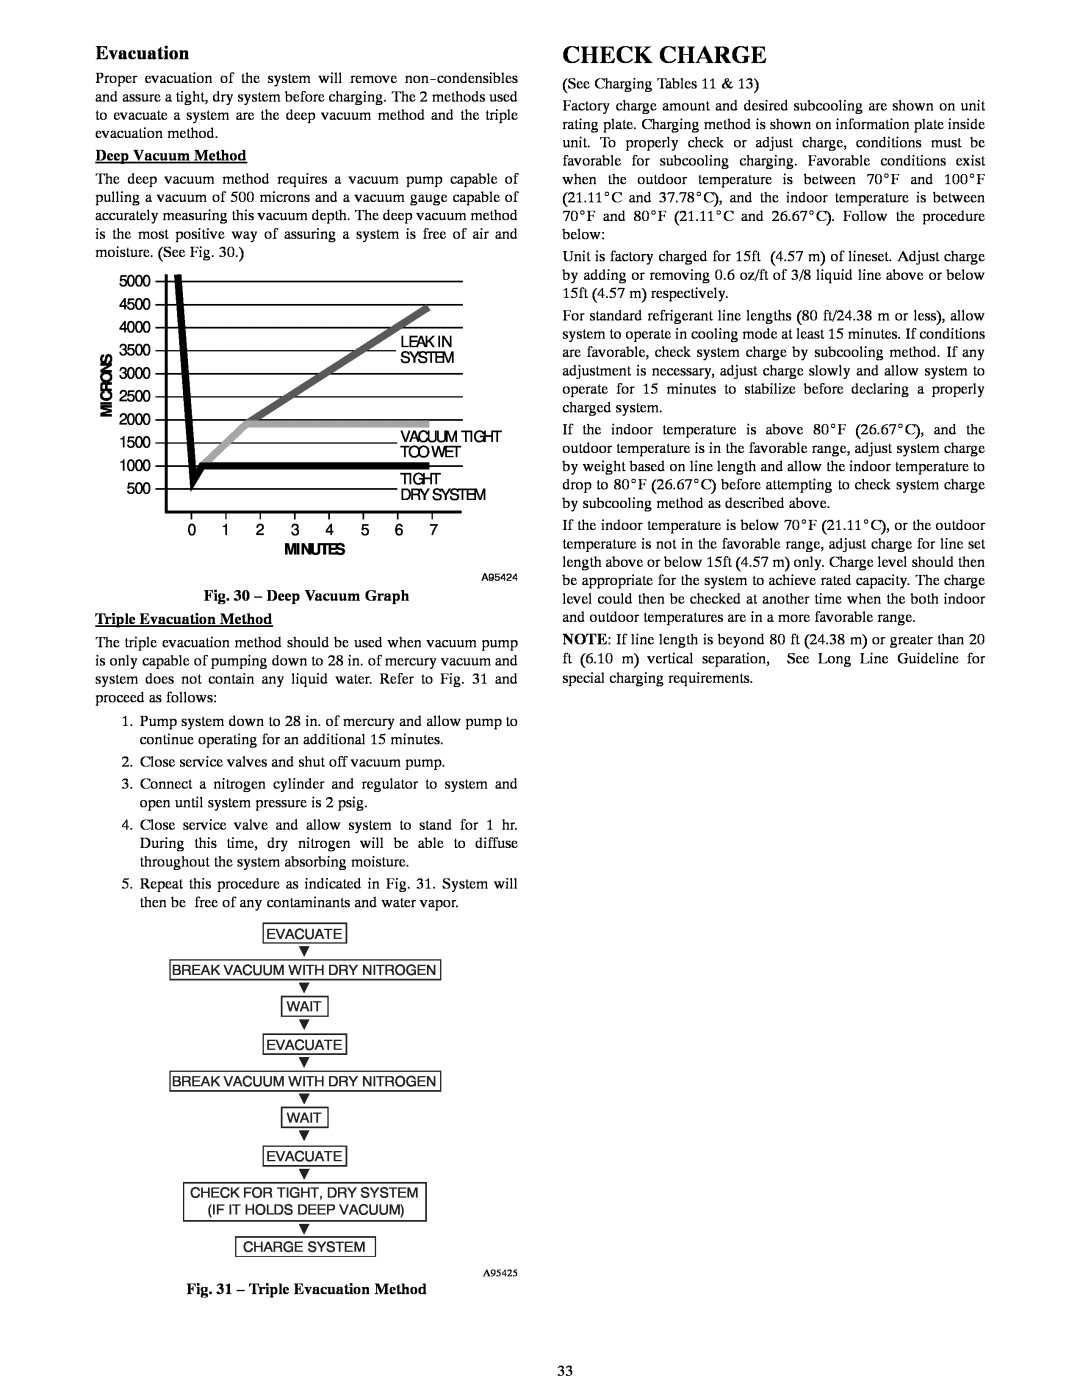 Bryant R-22 service manual Check Charge, Deep Vacuum Method, Minutes, Deep Vacuum Graph, Triple Evacuation Method 